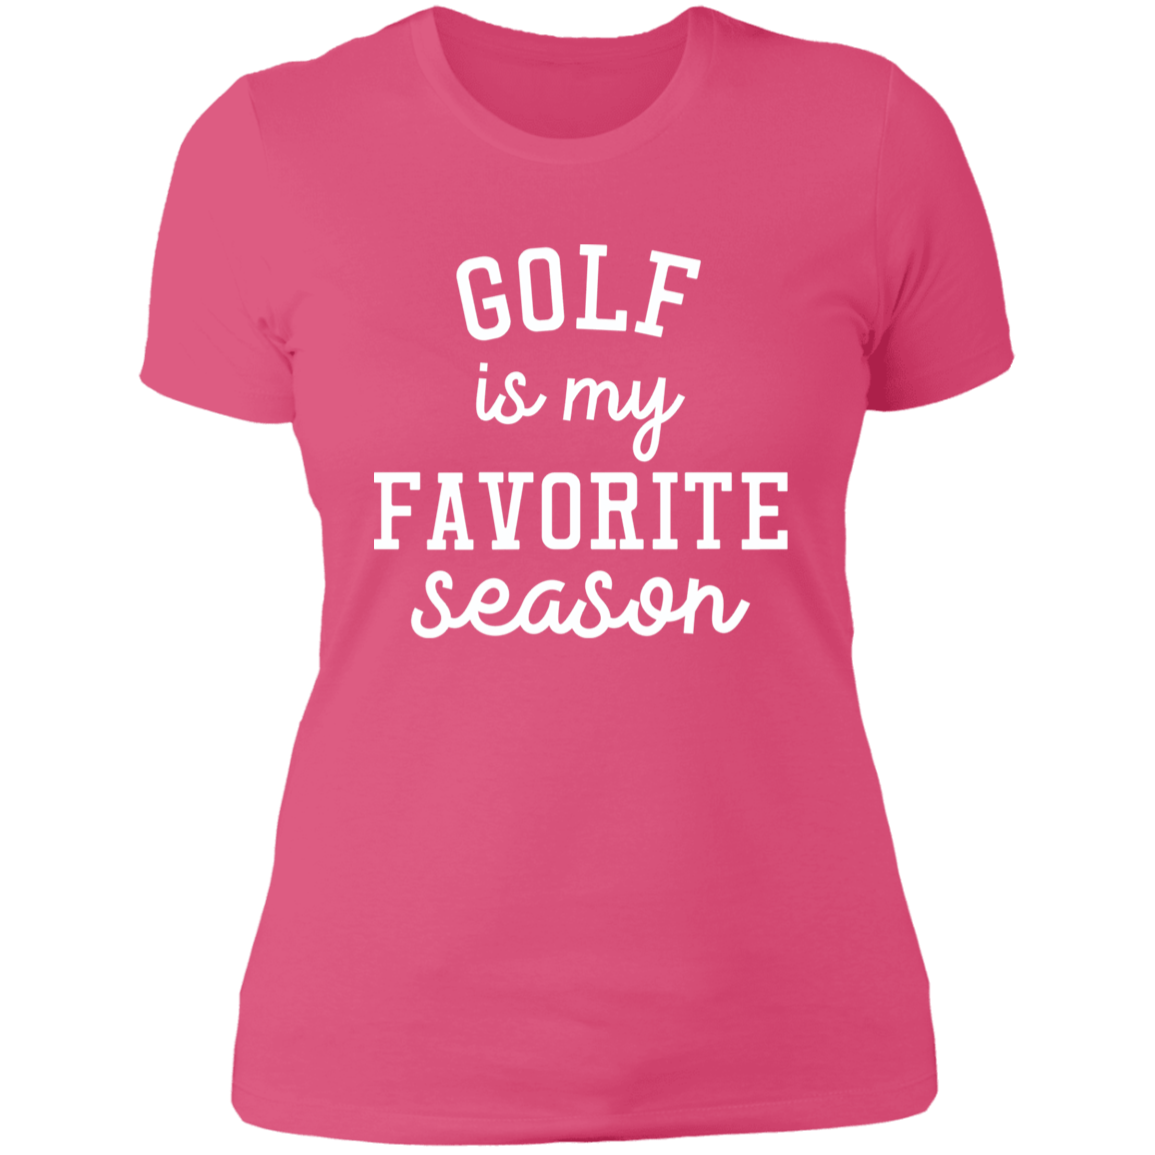 Golf My Favorite Season wht NL3900 Ladies' Boyfriend T-Shirt